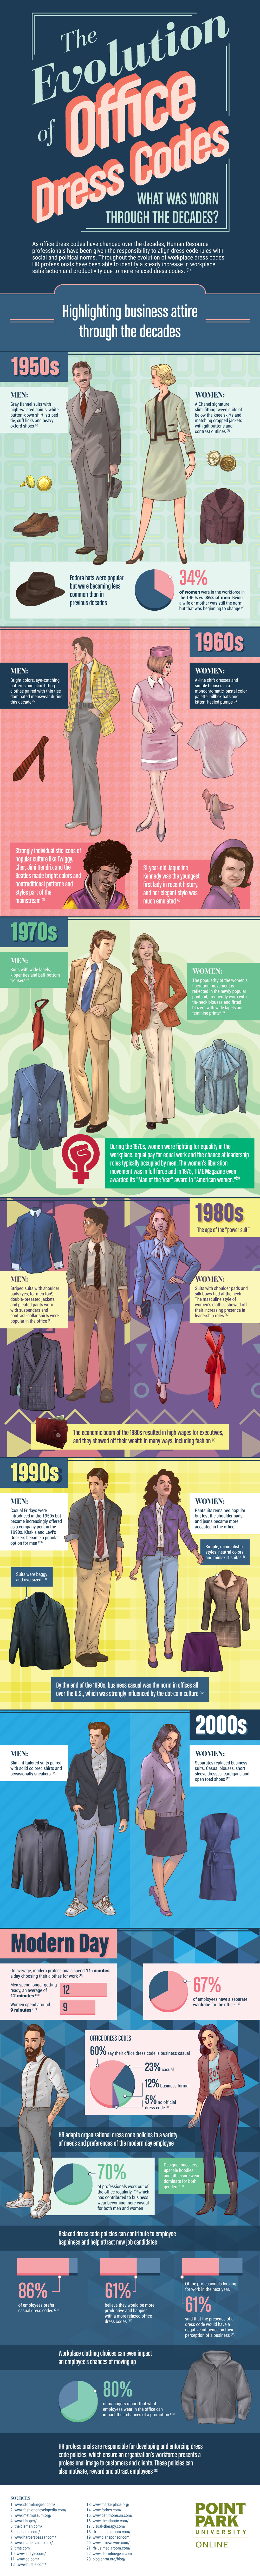 Evolution of Office Dress Codes